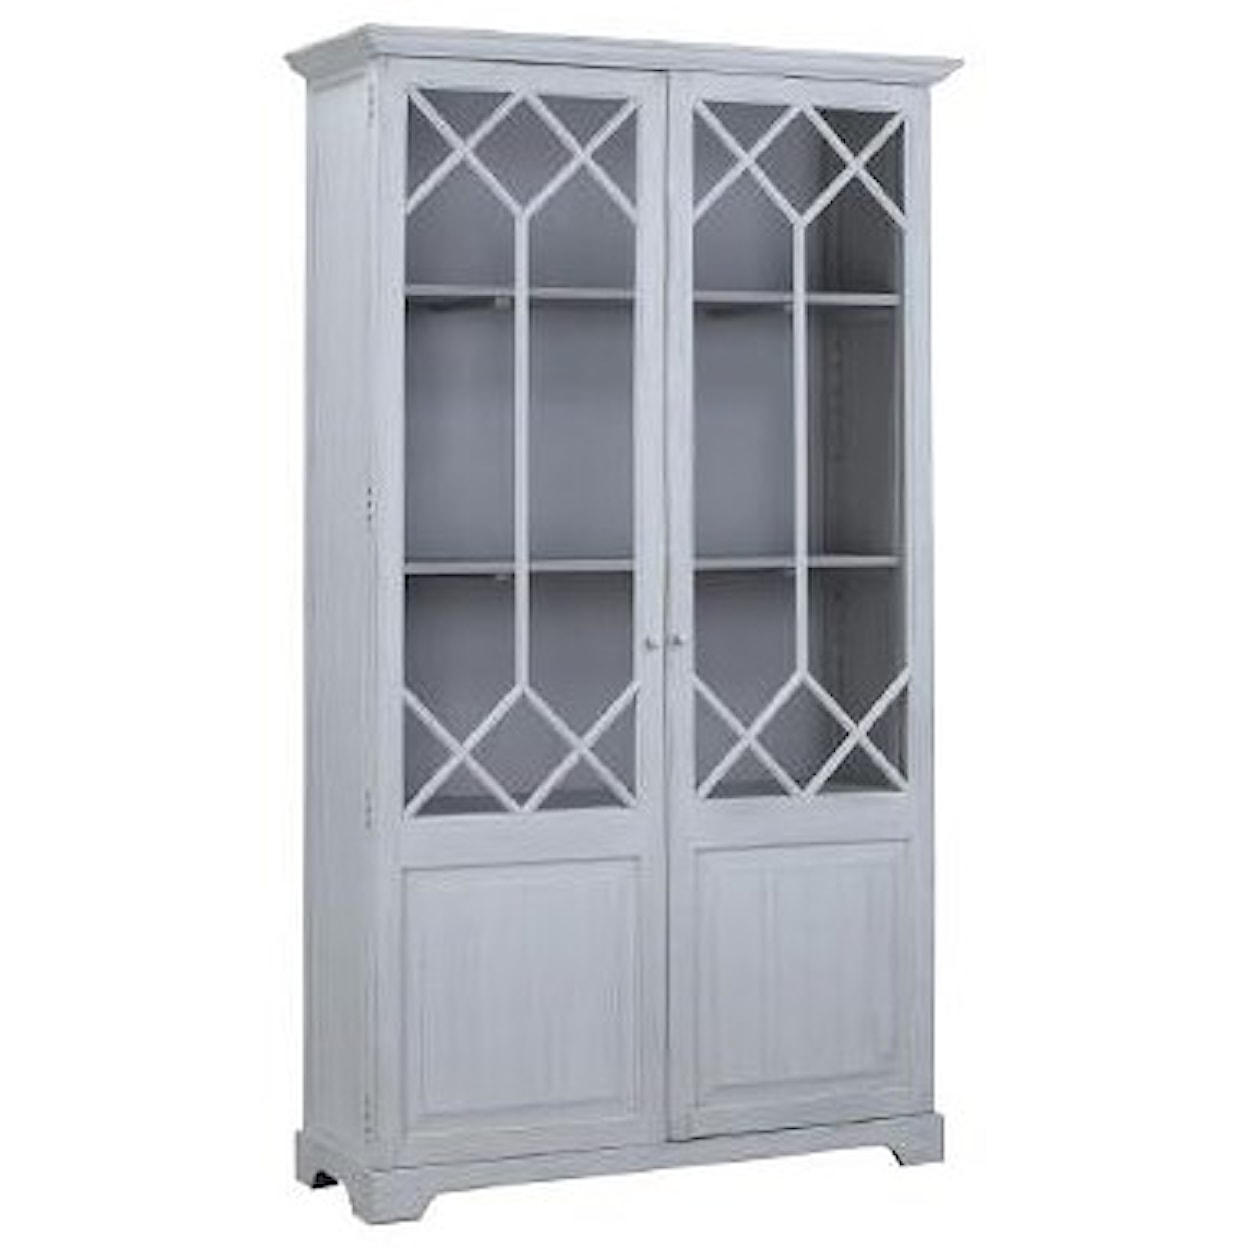 Dovetail Furniture Cabinets Alton Cabinet